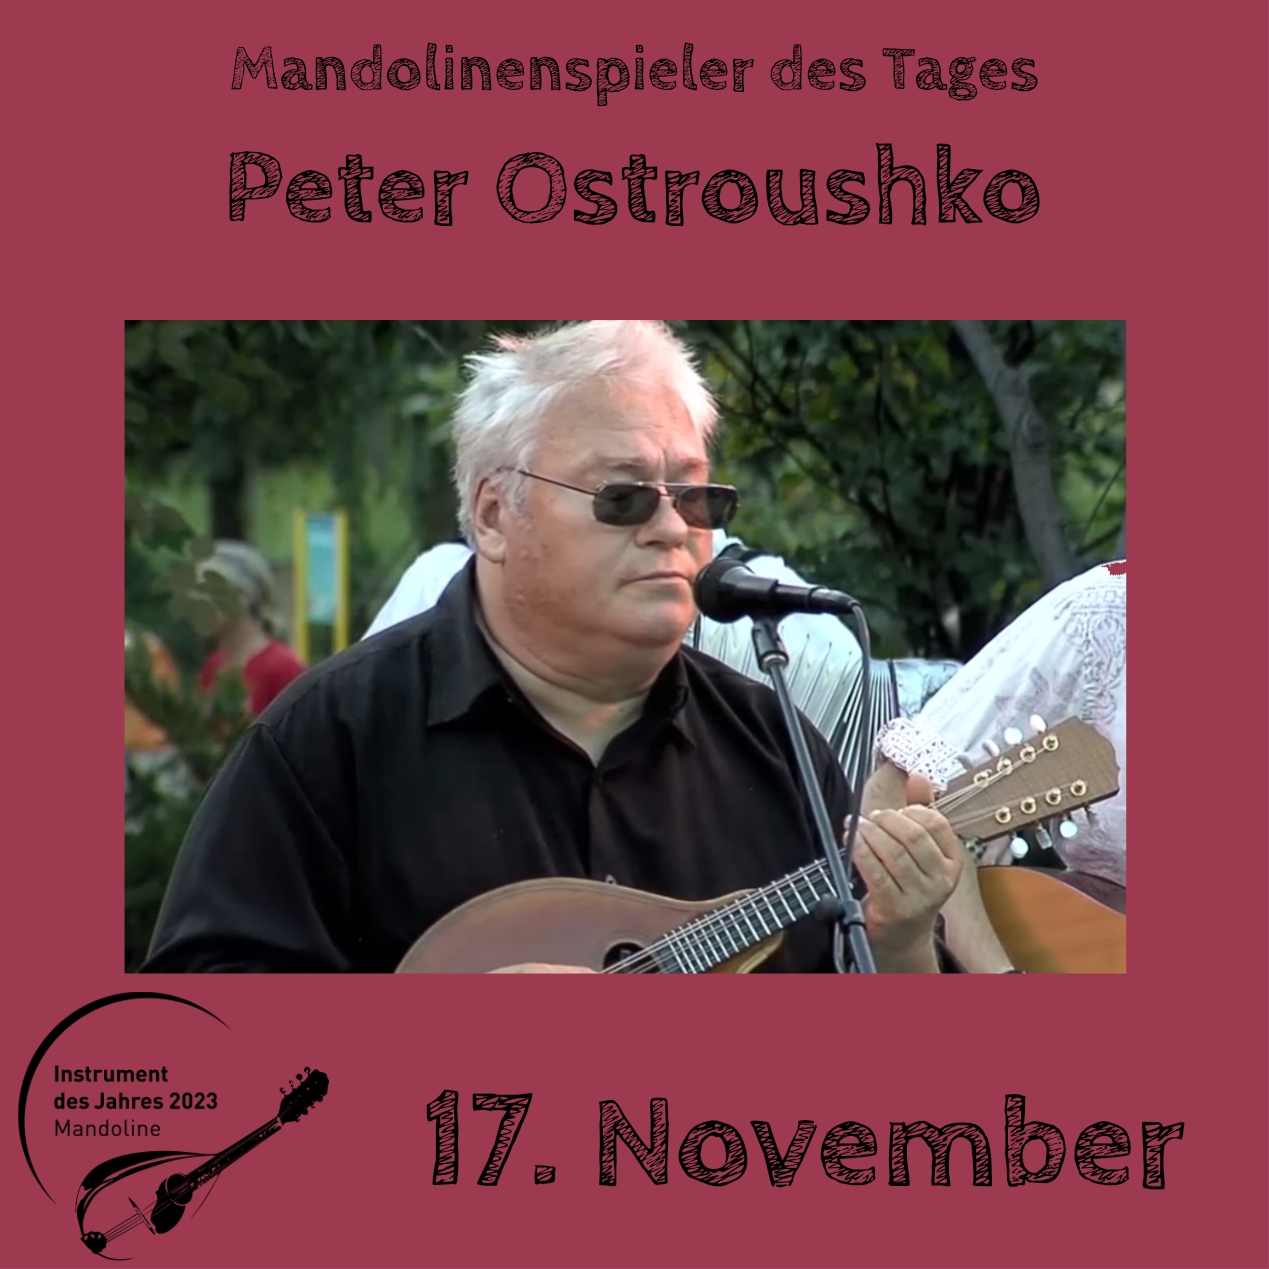 17. November - Peter Ostroushko Instrument des Jahres 2023 Mandolinenspieler Mandolinenspielerin des Tages